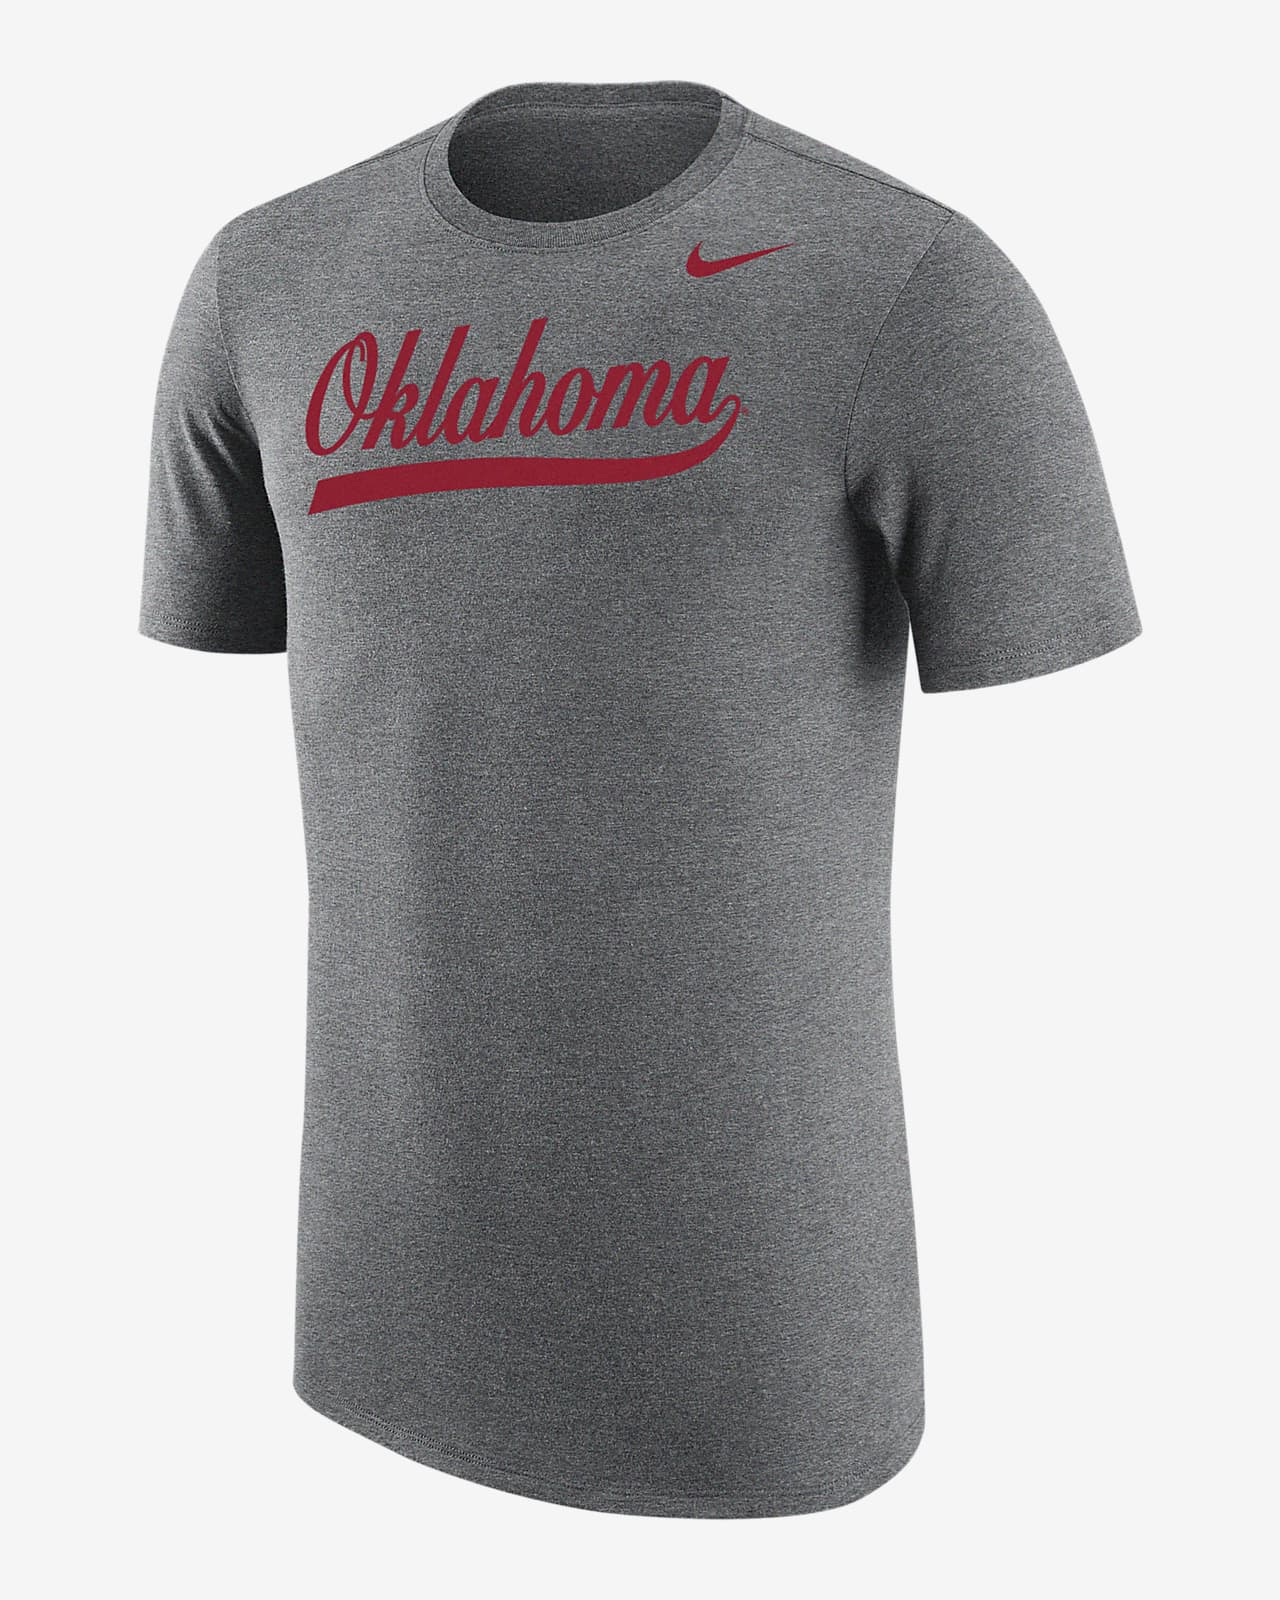 Playera universitaria Nike para hombre de Oklahoma